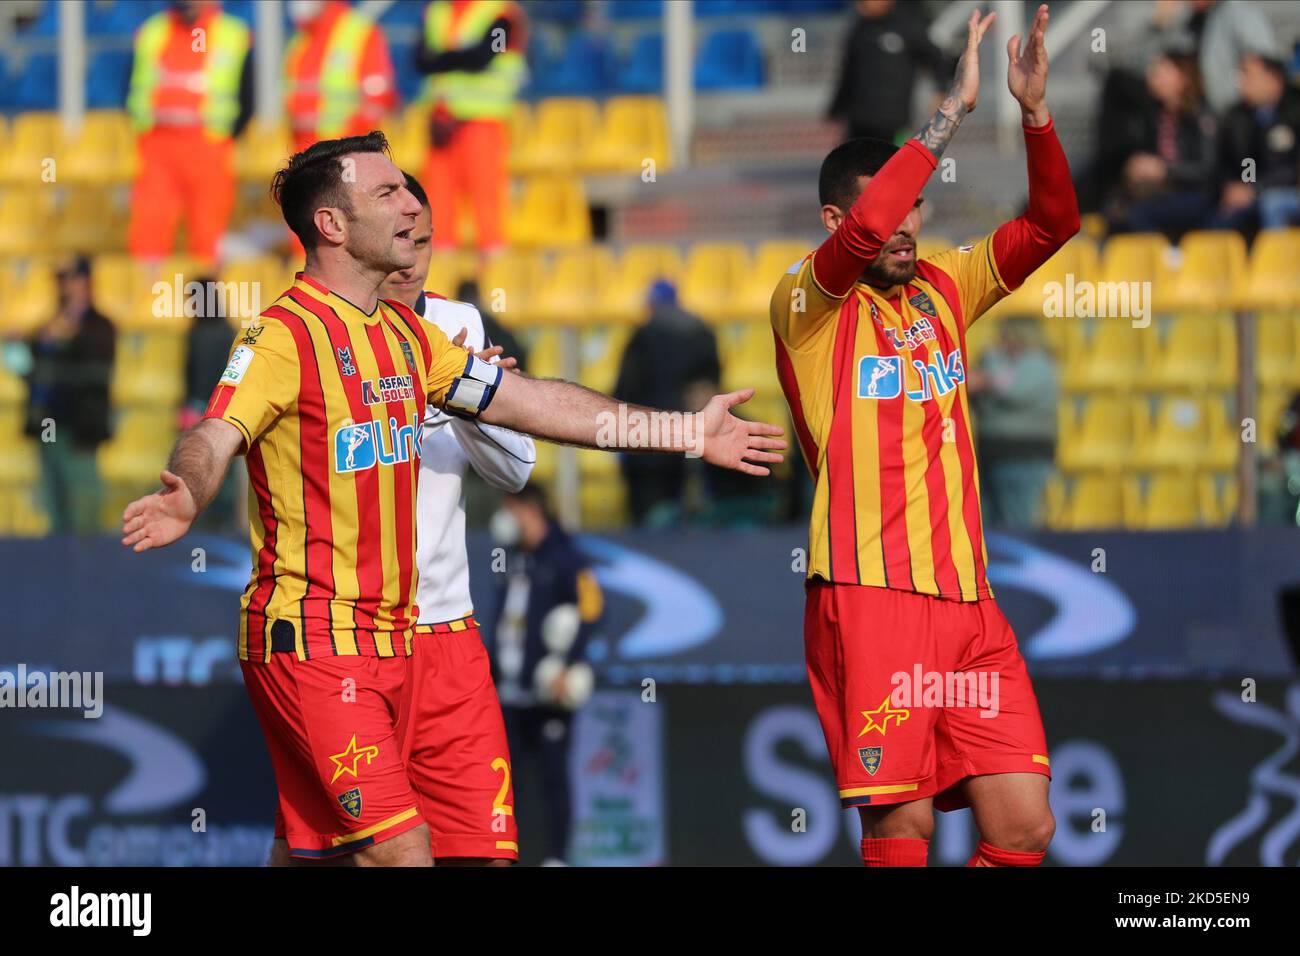 Captain Fabio Lucioni (US Lecce) raises the cup to the sky for the